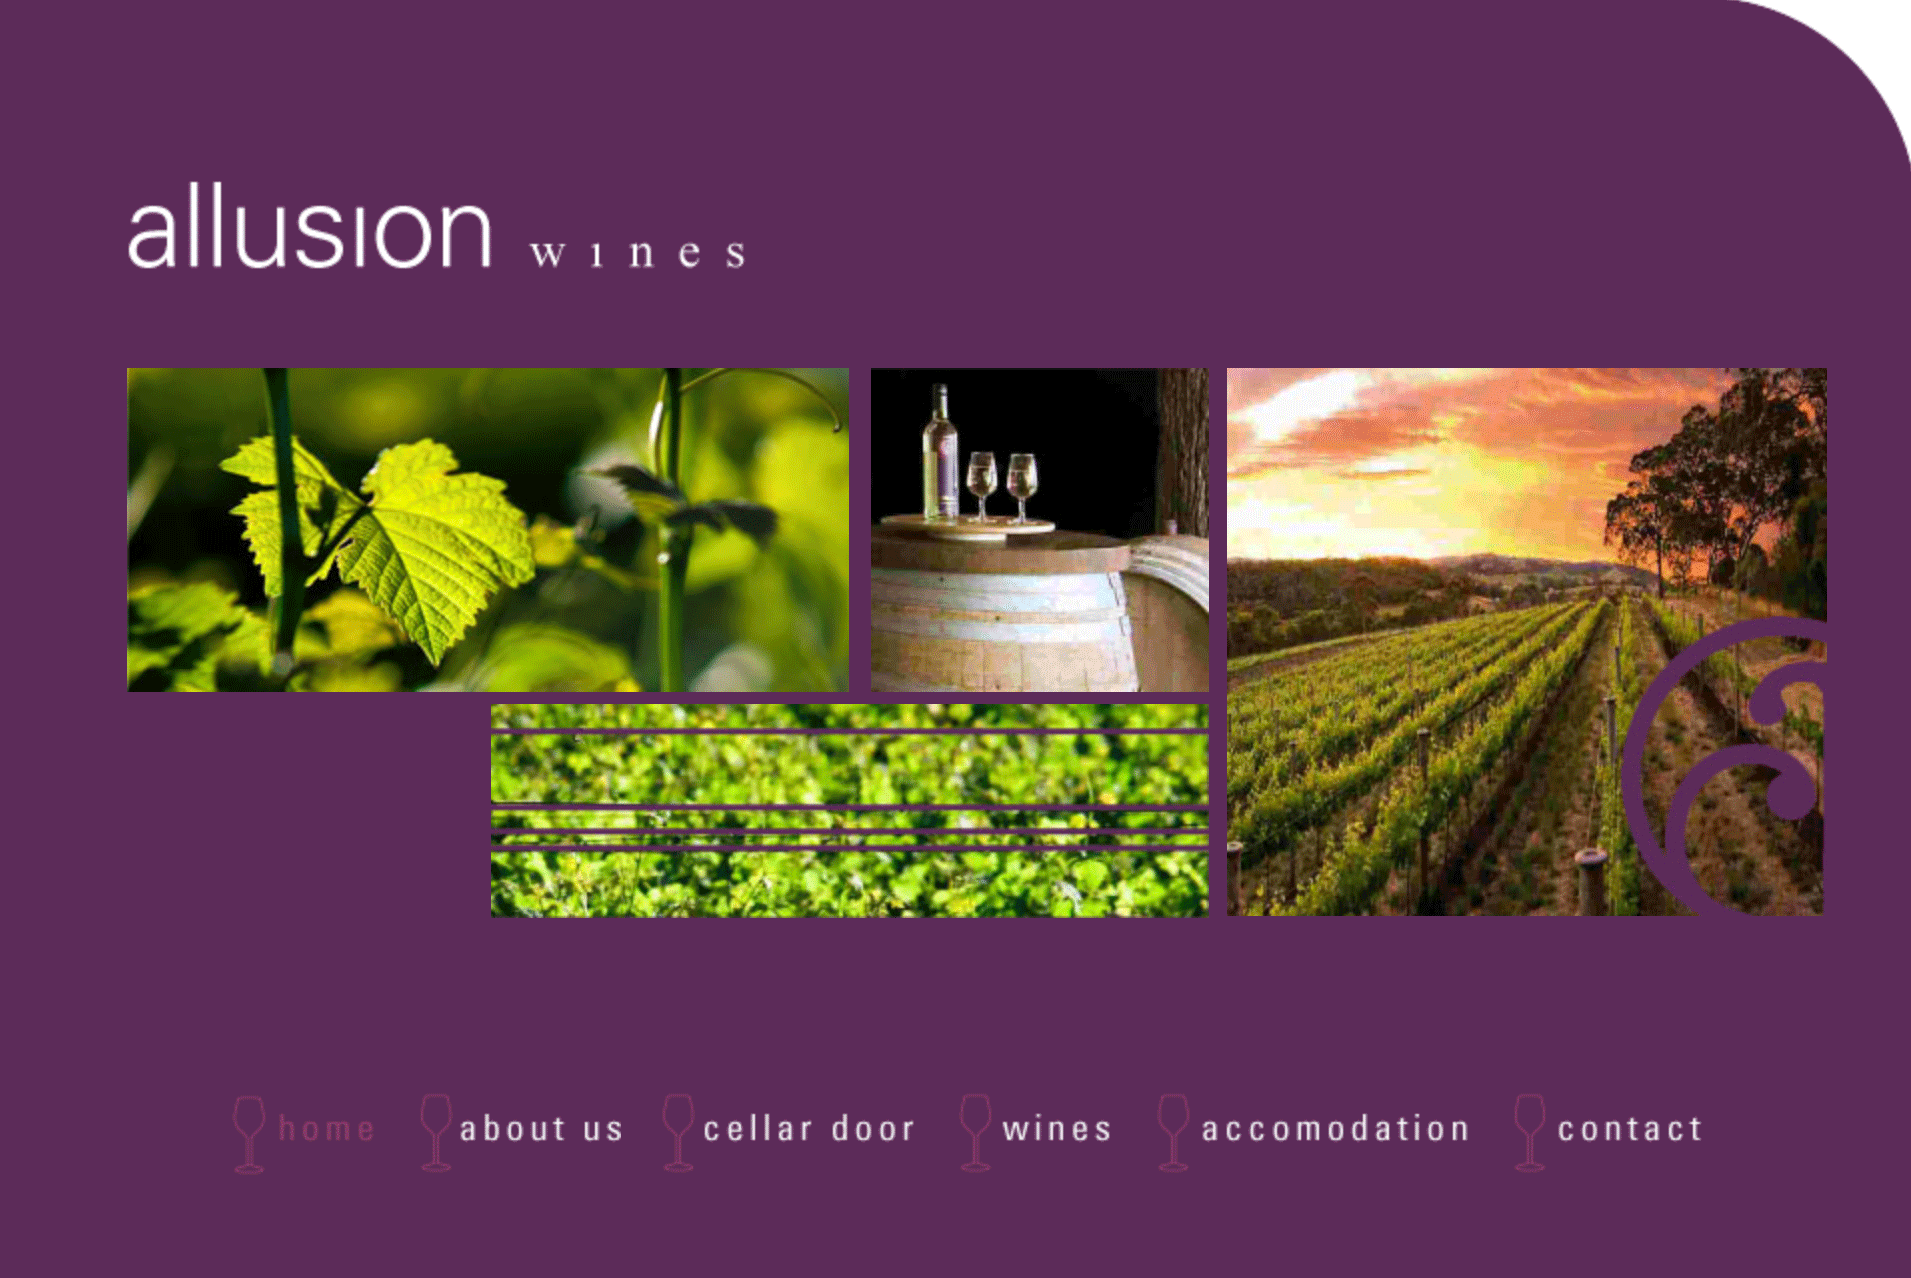 allusion wines